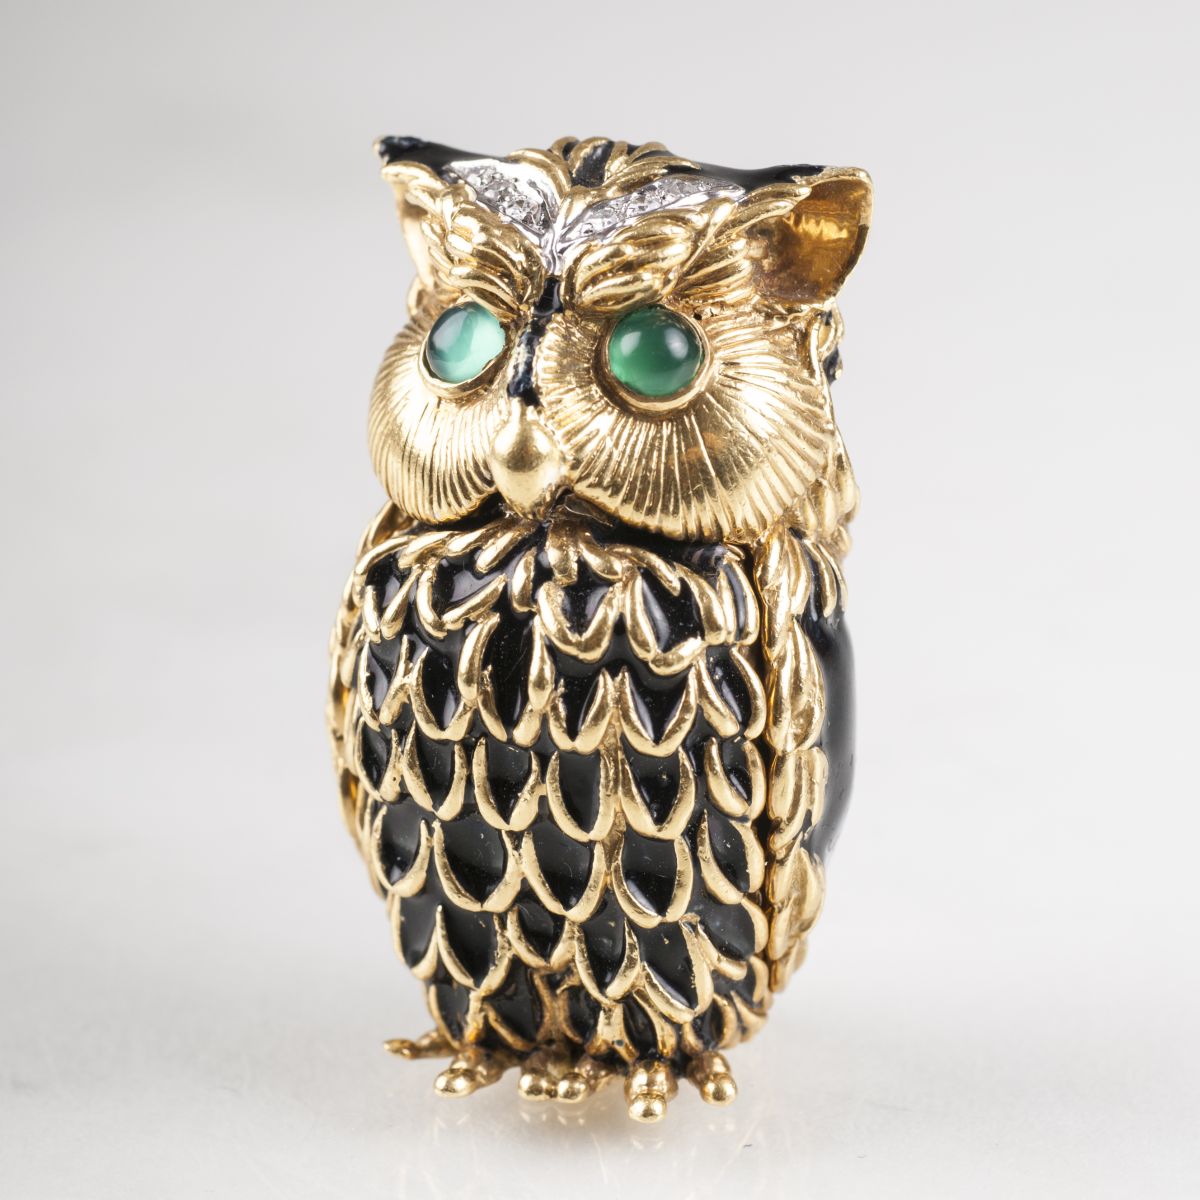 A miniature golden box 'Owl' with diamonds